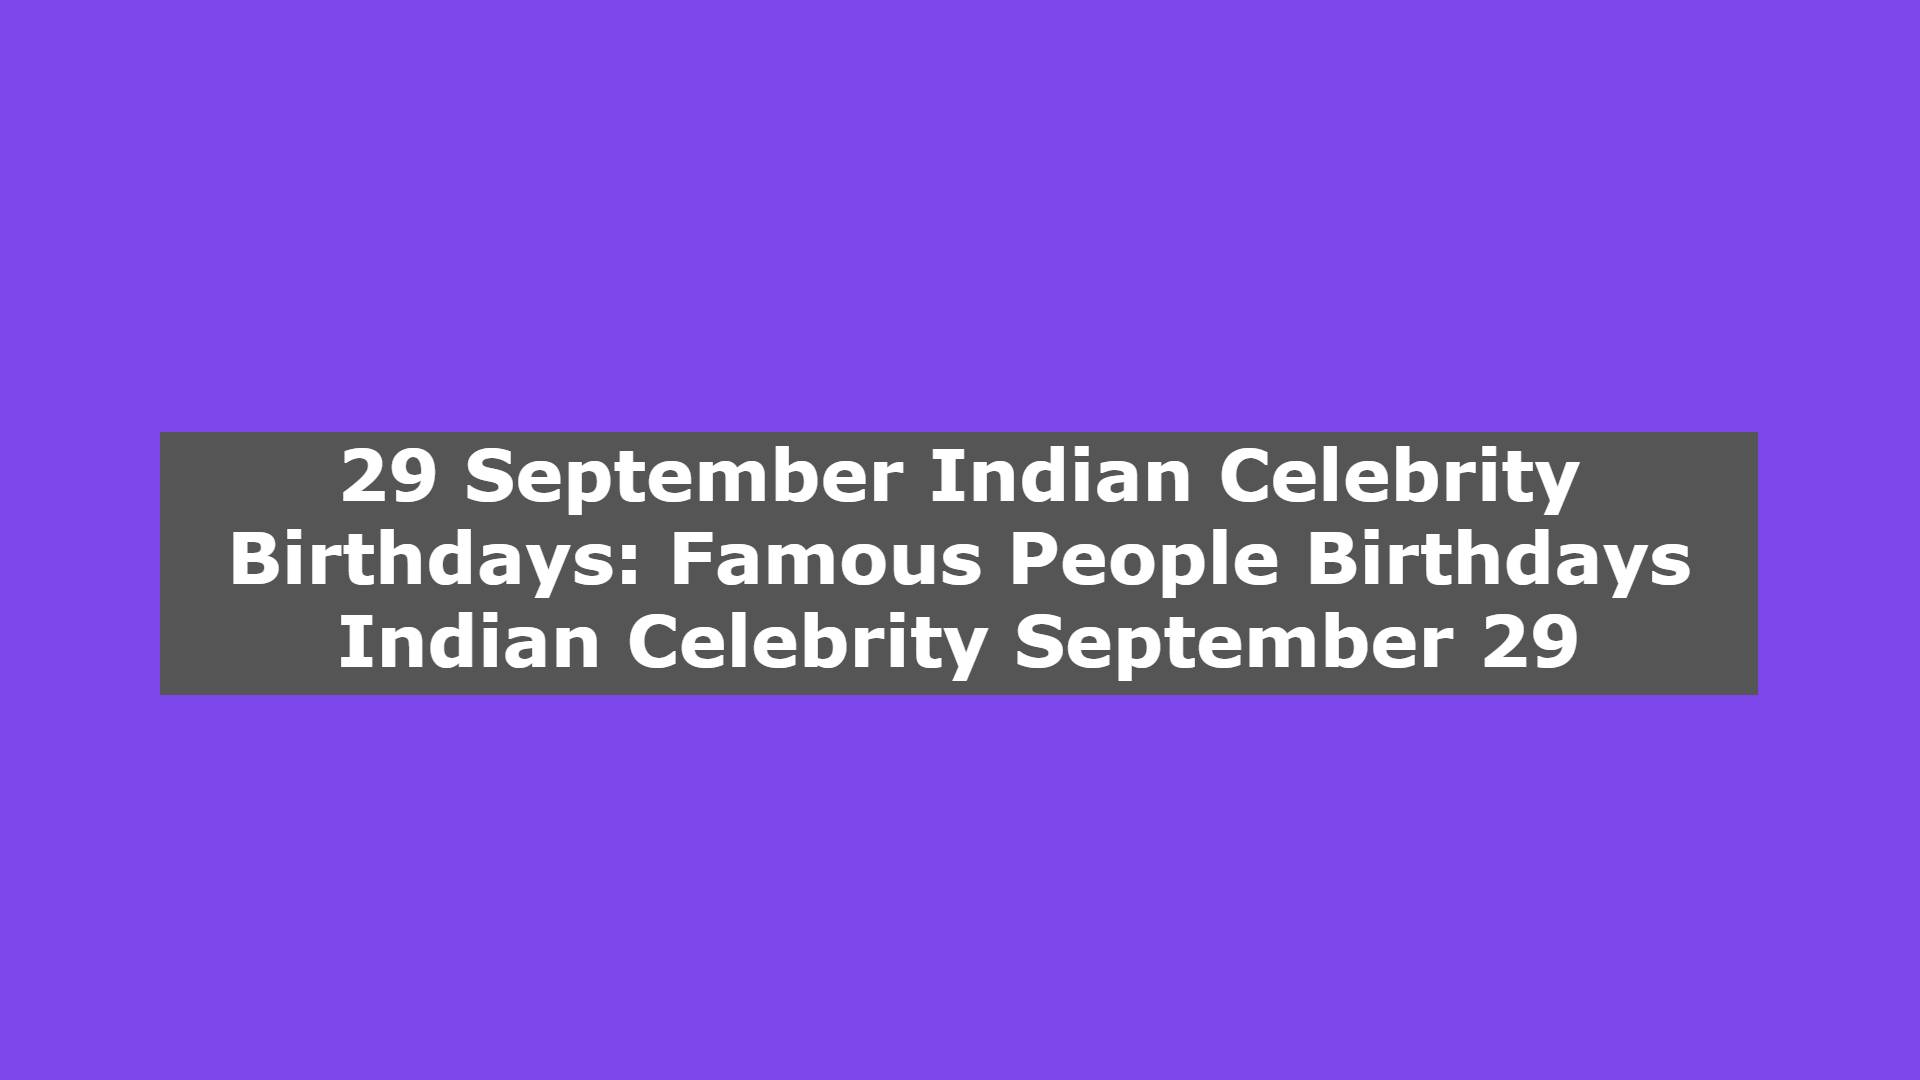 29 September Indian Celebrity Birthdays: Famous People Birthdays Indian Celebrity September 29